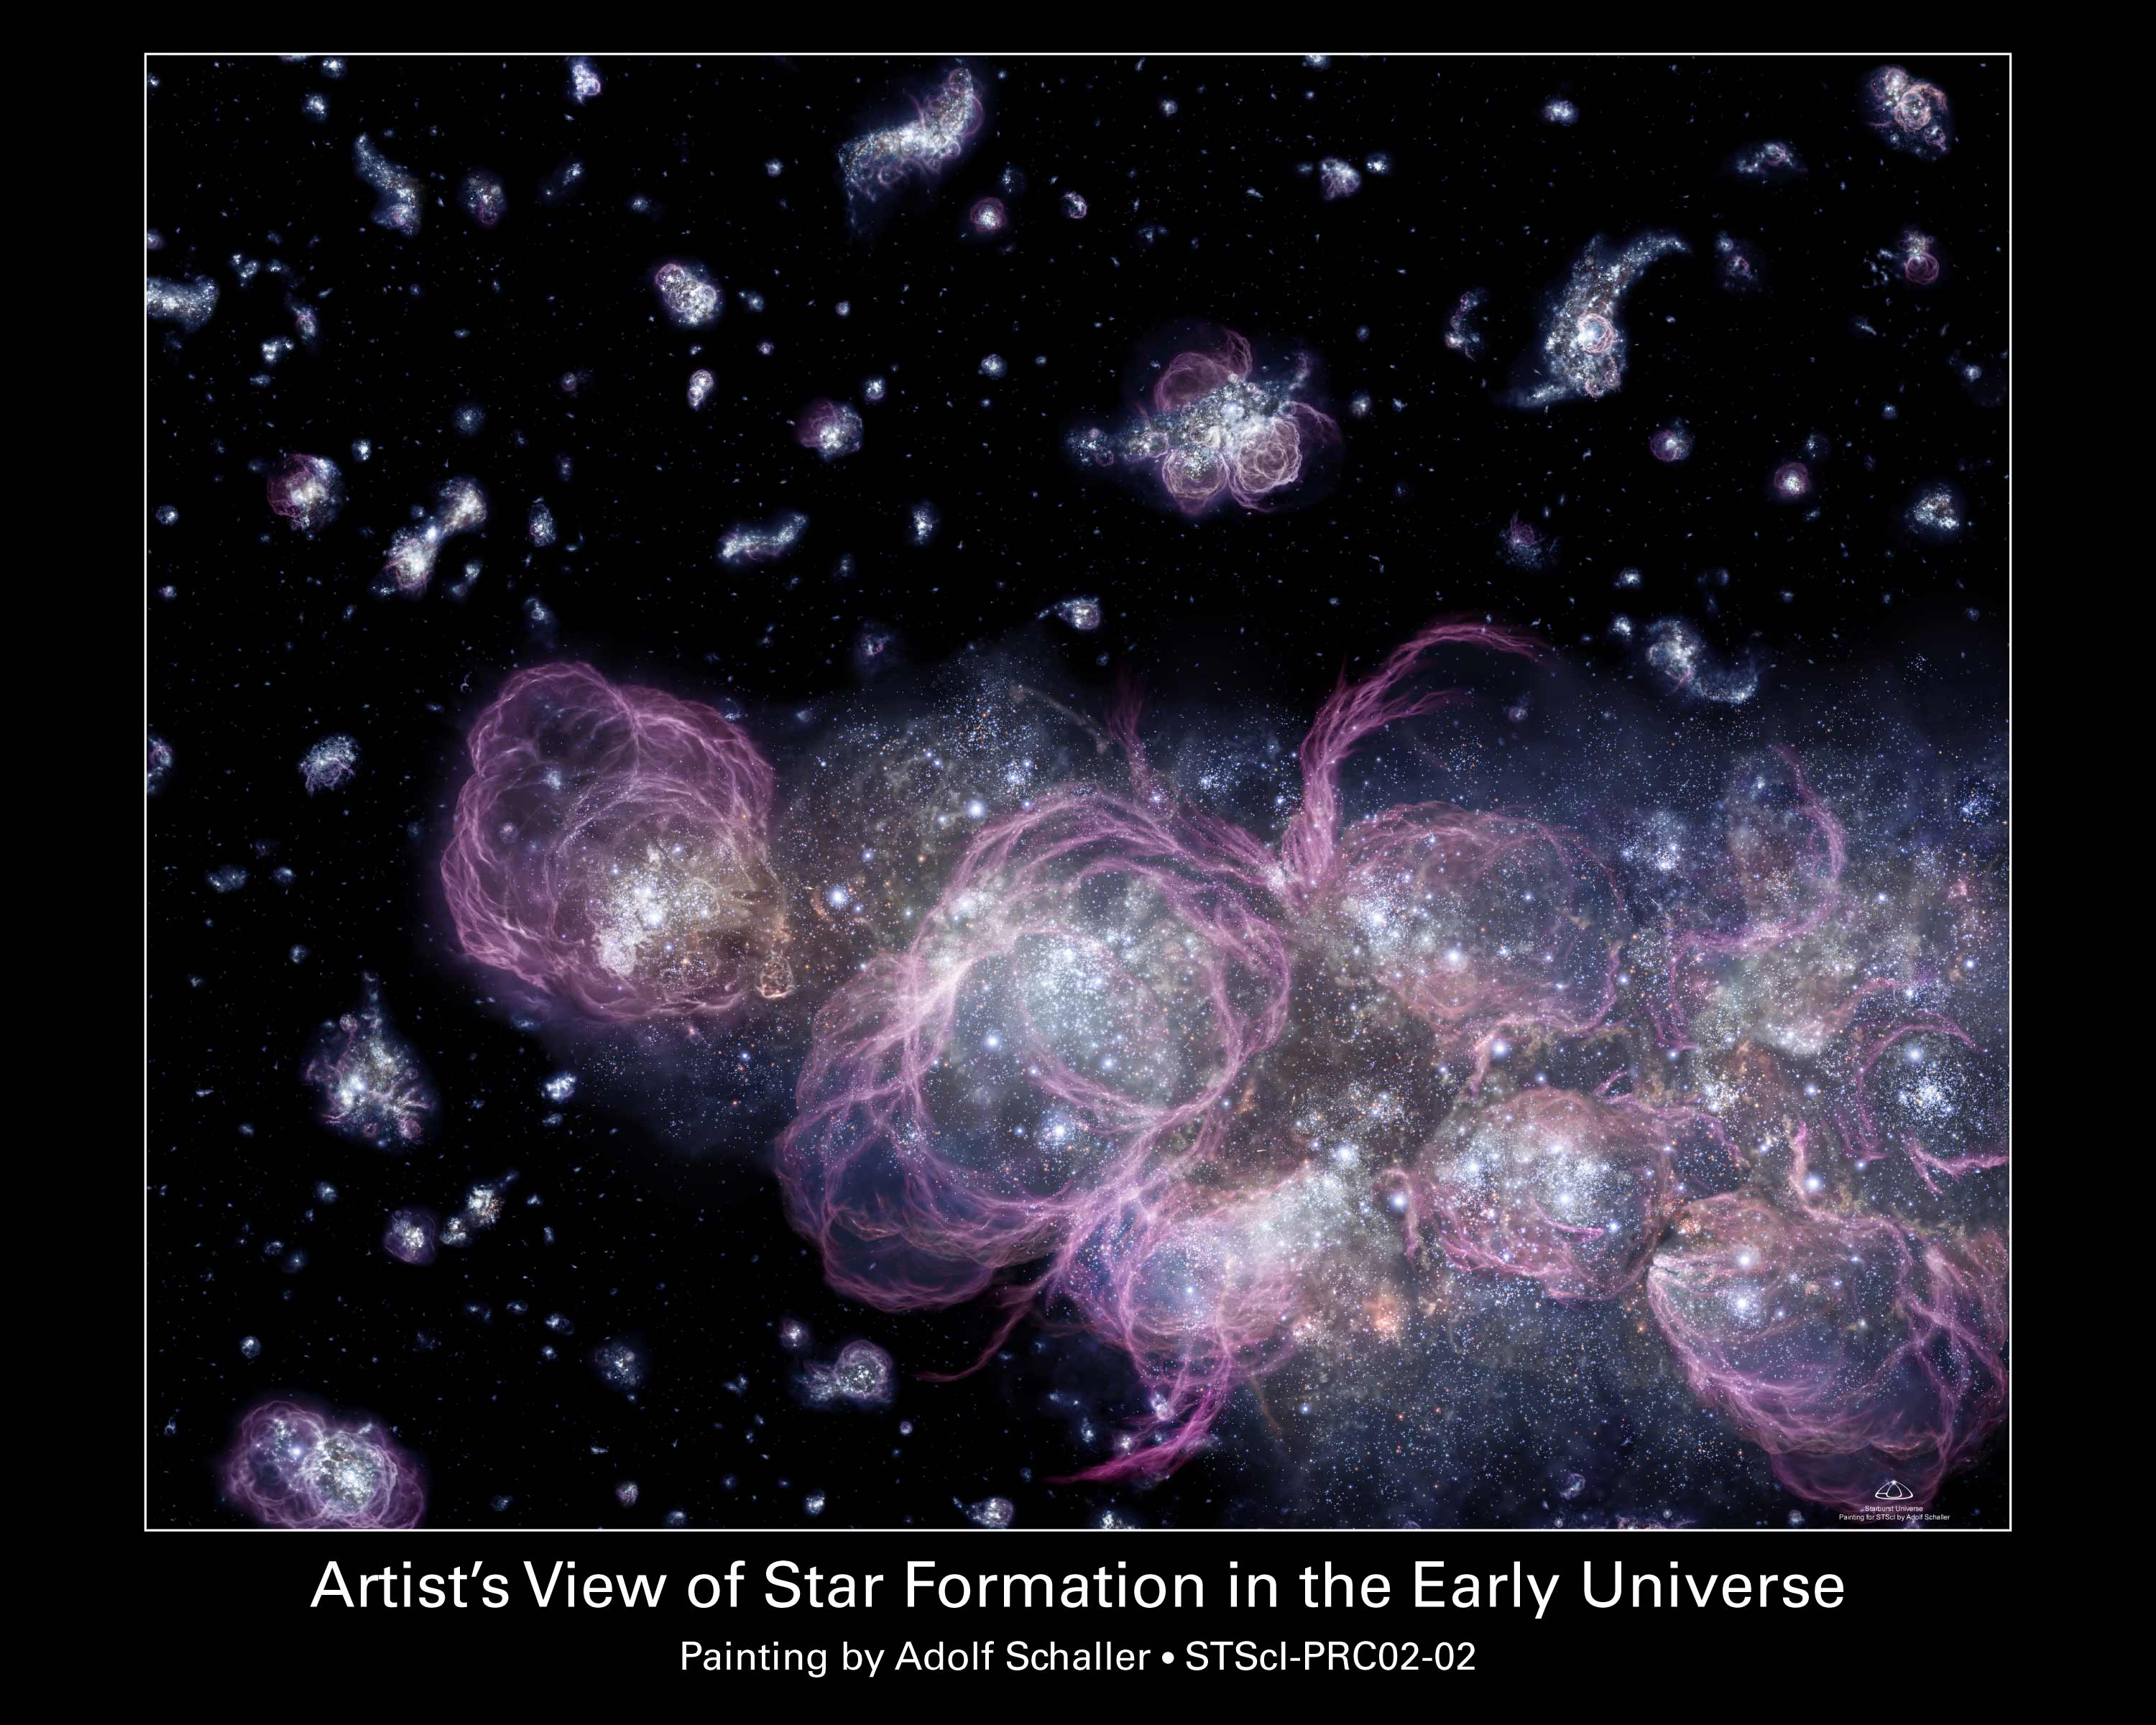 StarBust Universe